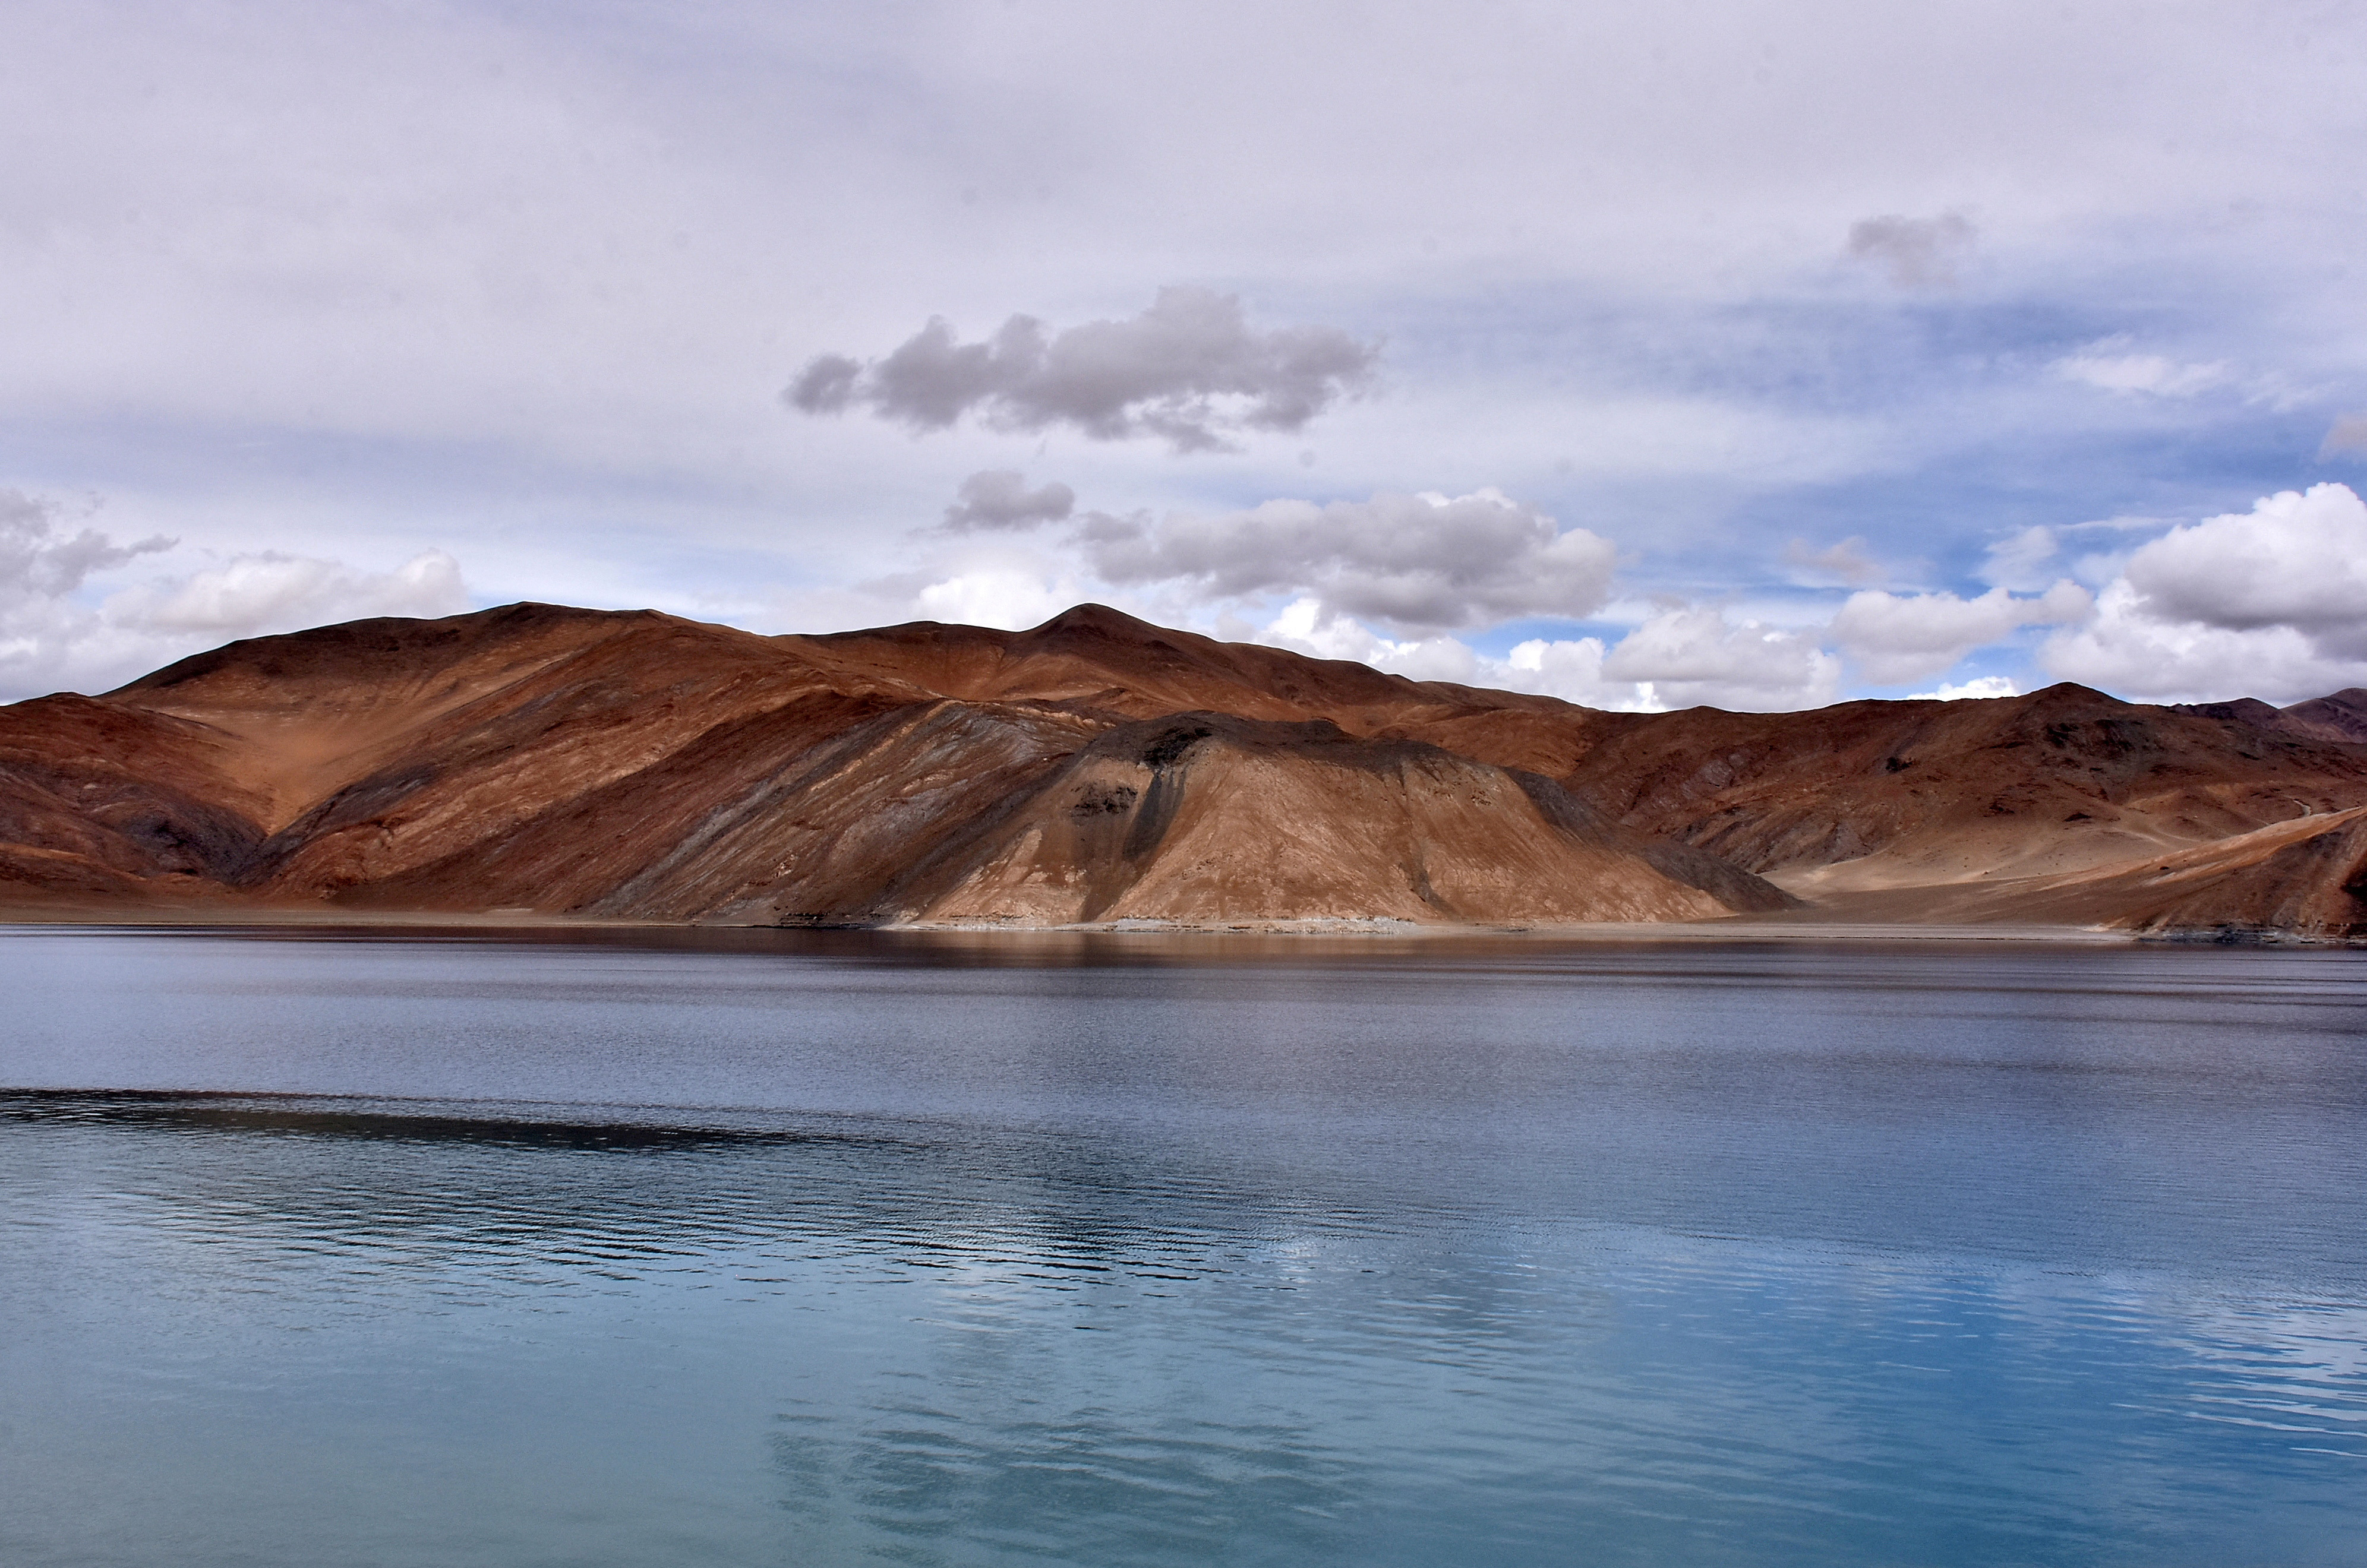 FILE PHOTO: A view of Pangong Tso lake in Ladakh region